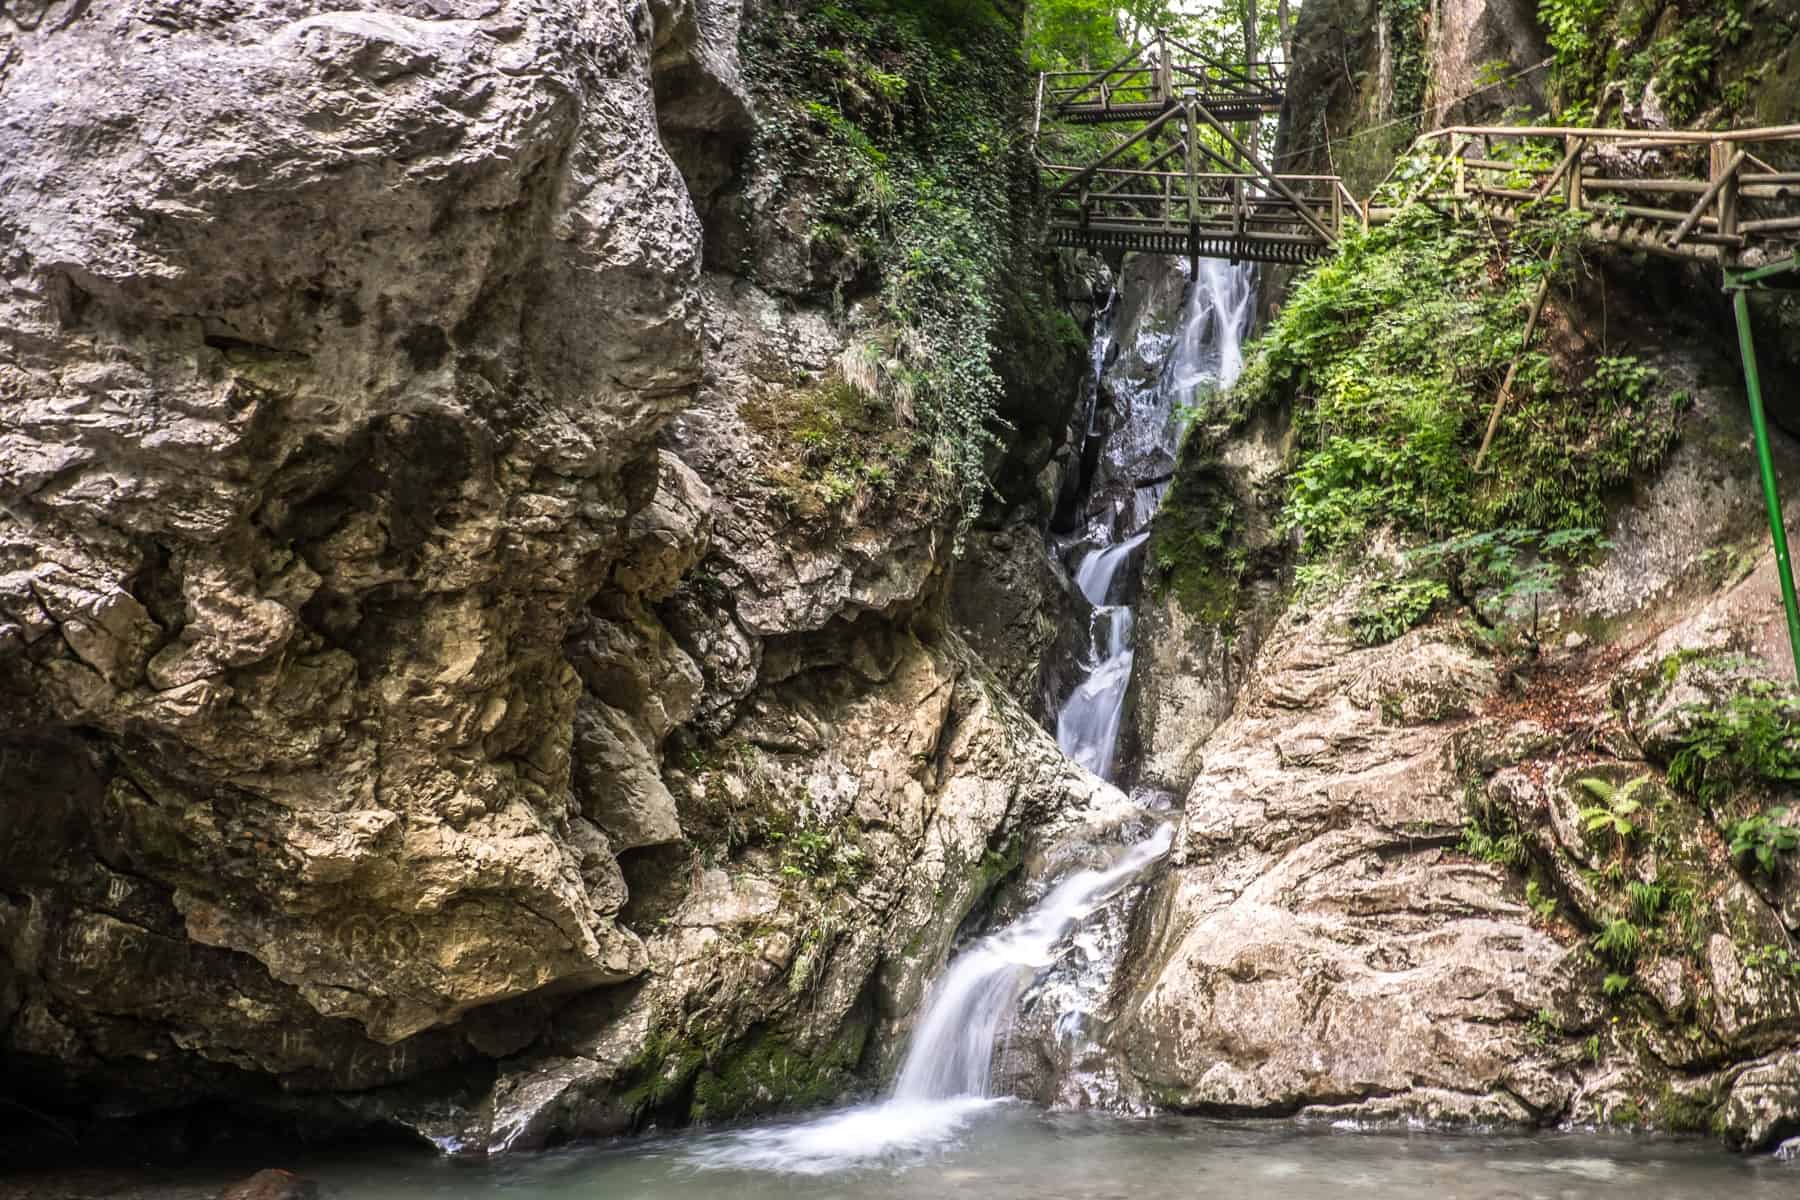 The white waterfall called Kesselfall runs betweens two brown rock faces in the Kesselfallklamm gorge in Graz, Austria